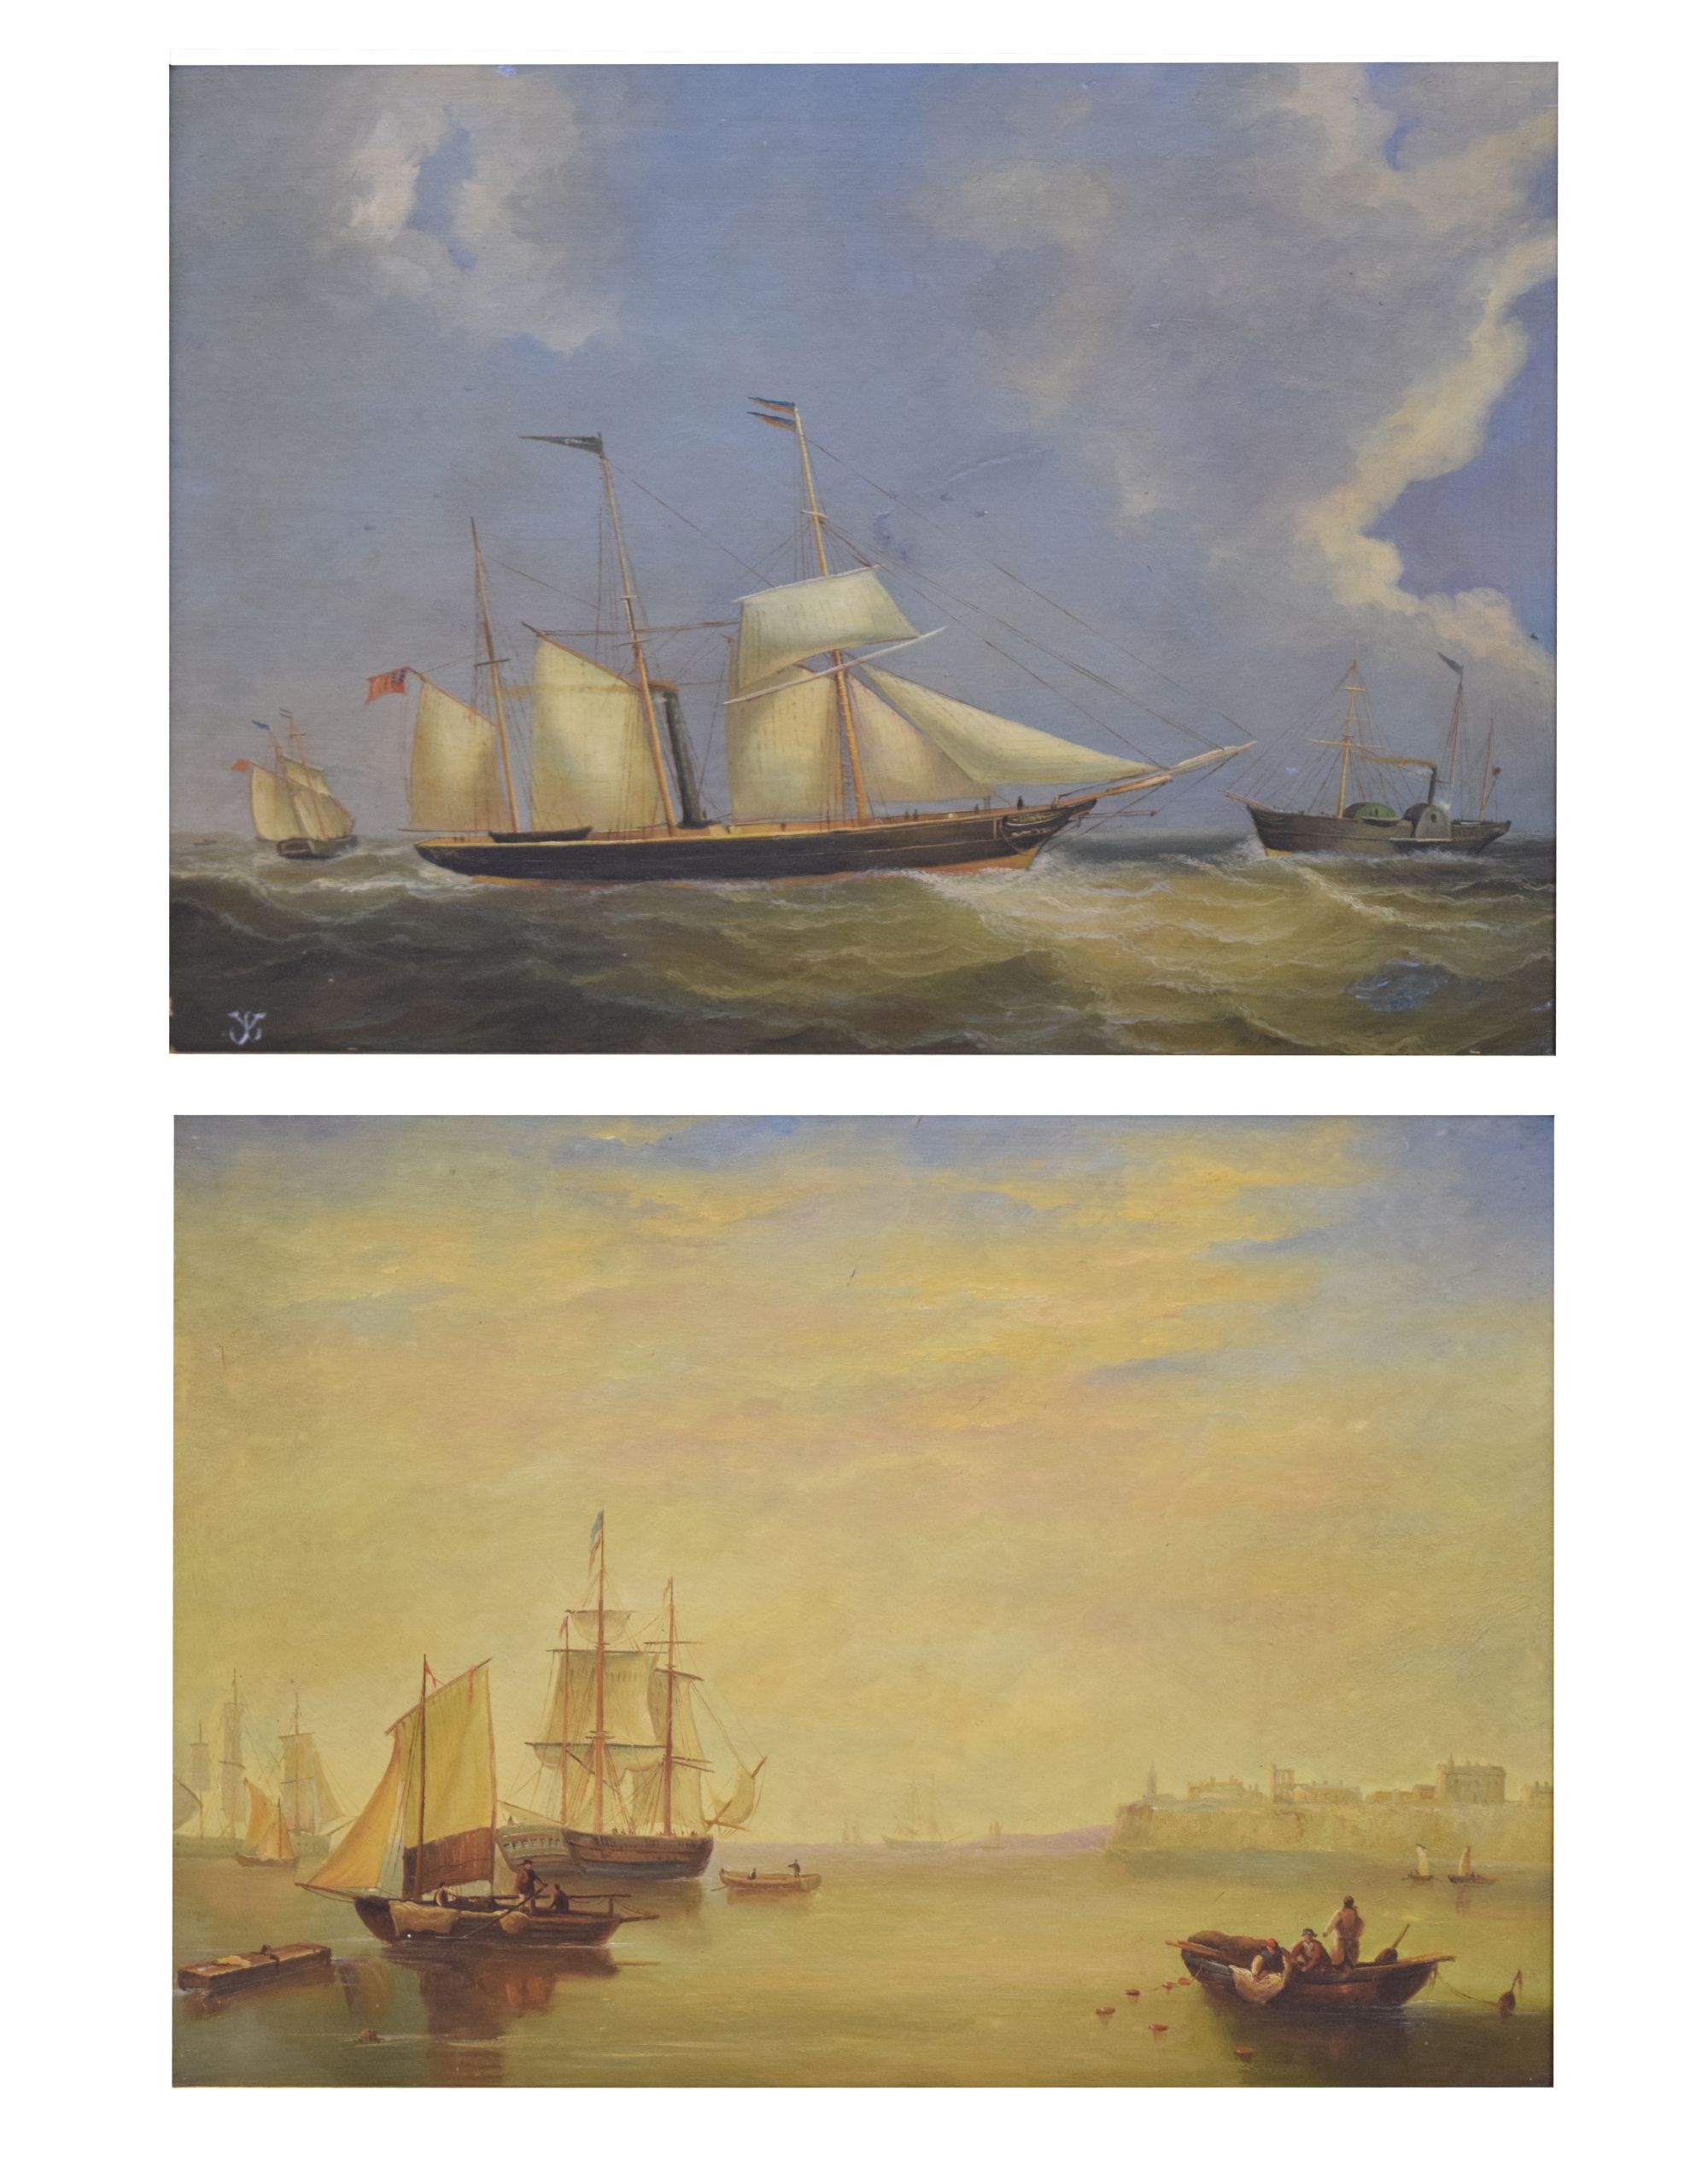 Pair of 19th century style maritime studies - Continental School, 20th Century